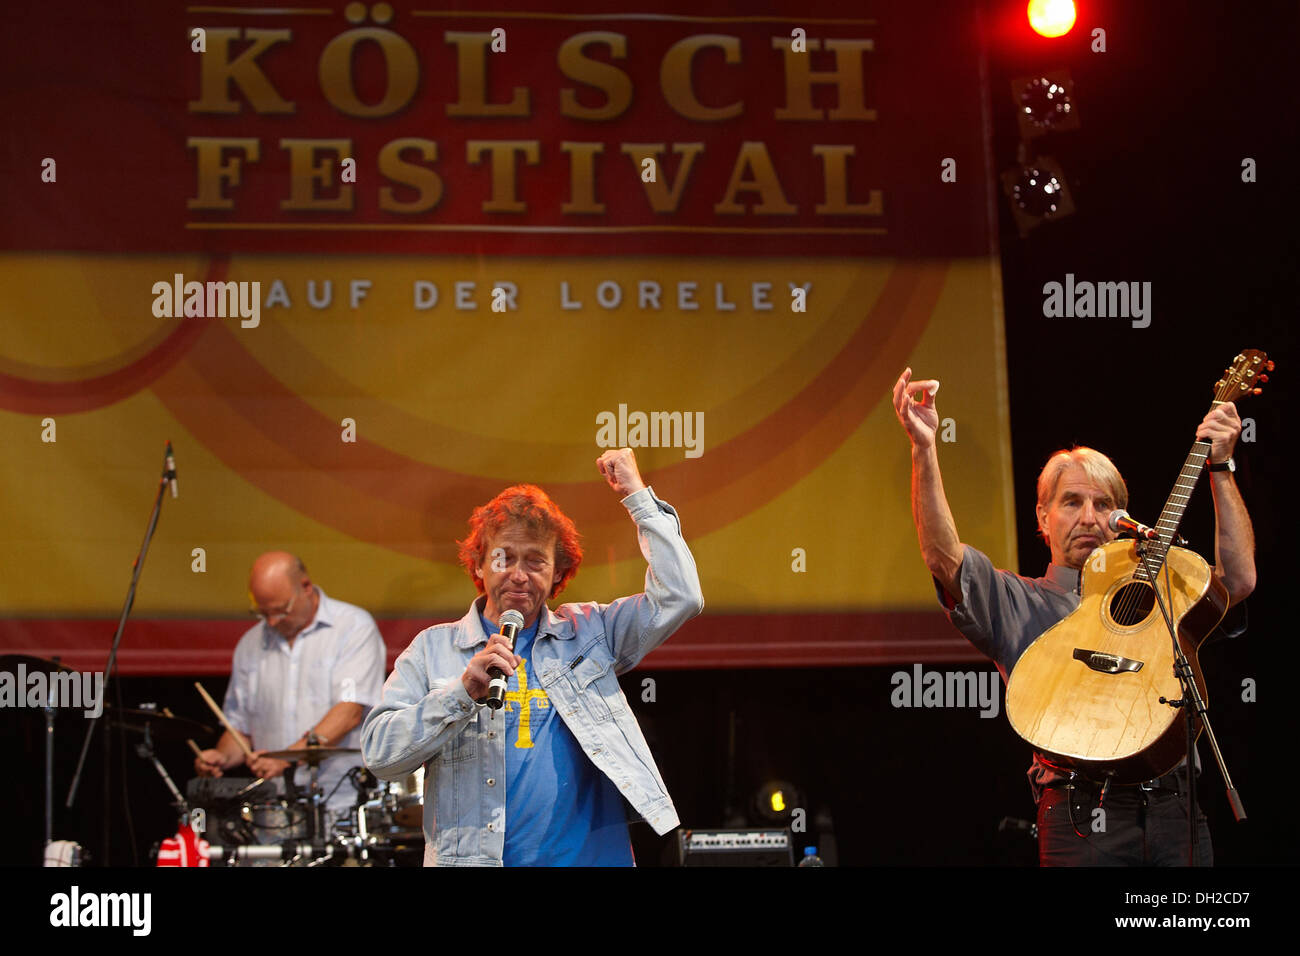 Blaeck Foeoes, Koelsch Festival, Loreley open-air, Stadio San Goarshausen, Renania-Palatinato Foto Stock